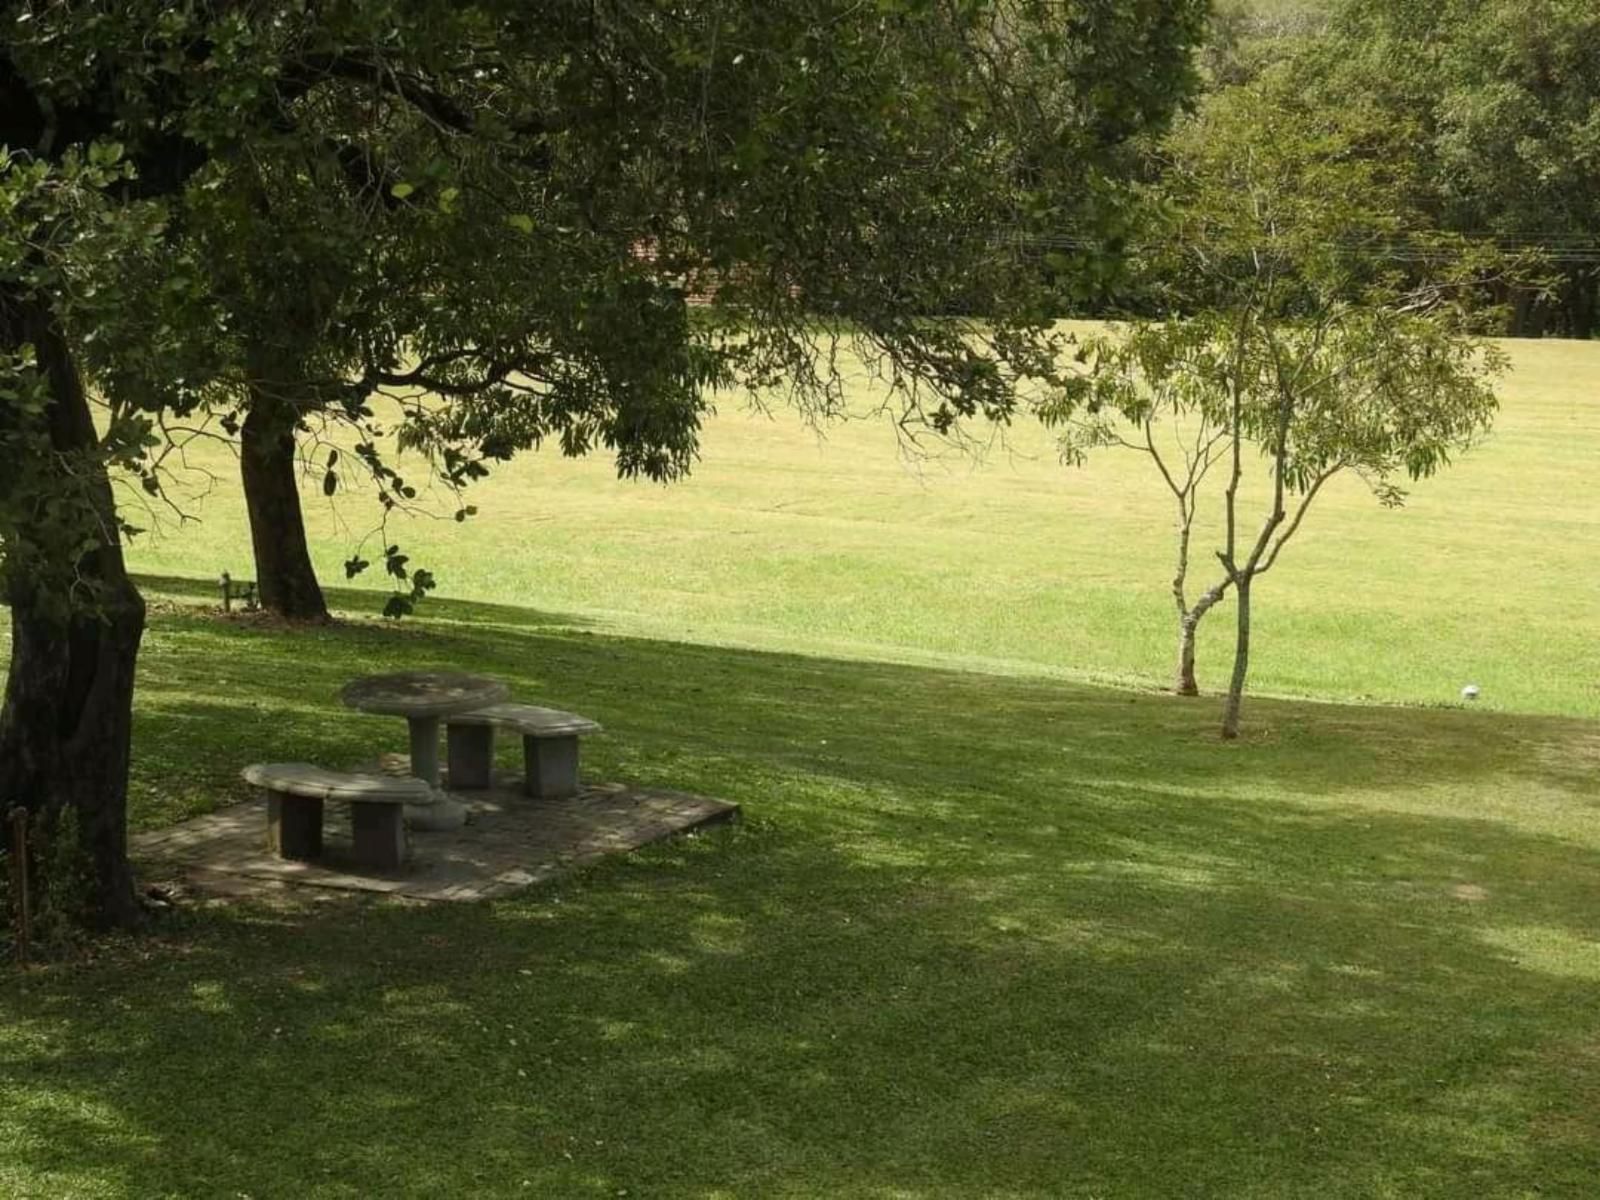 Nearbig5Numbi Lodge Numbi Park Hazyview Mpumalanga South Africa Grave, Architecture, Religion, Plant, Nature, Tree, Wood, Cemetery